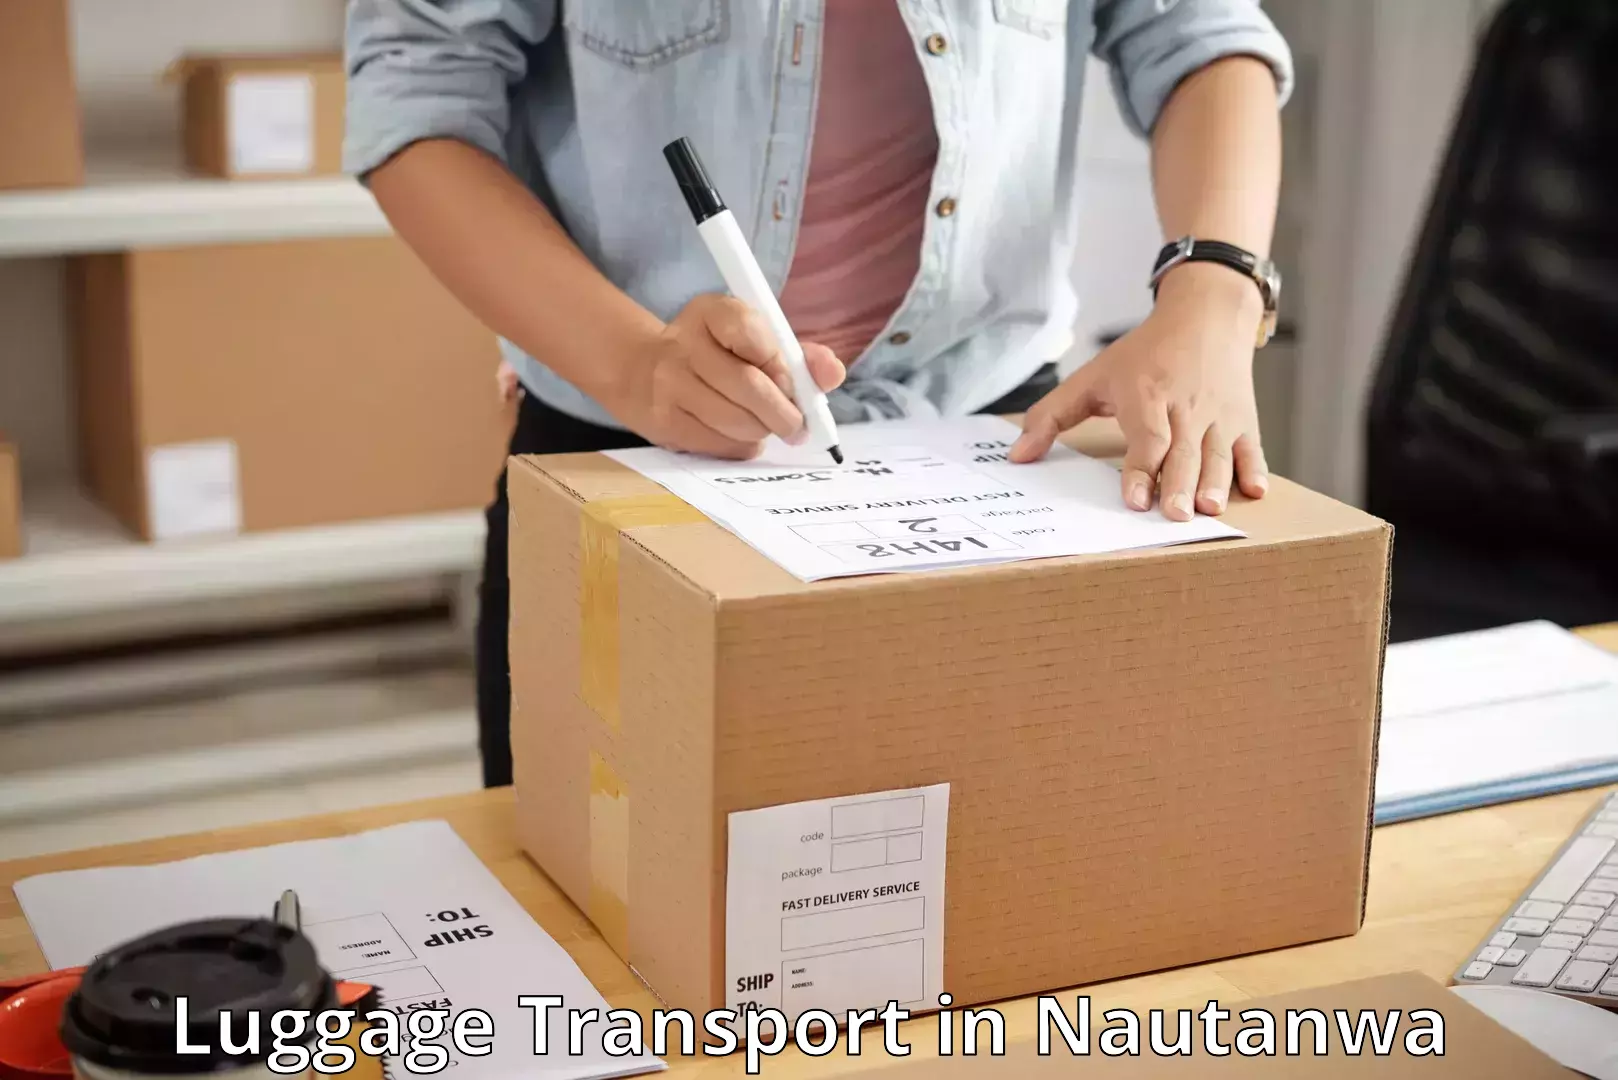 Urgent luggage shipment in Nautanwa